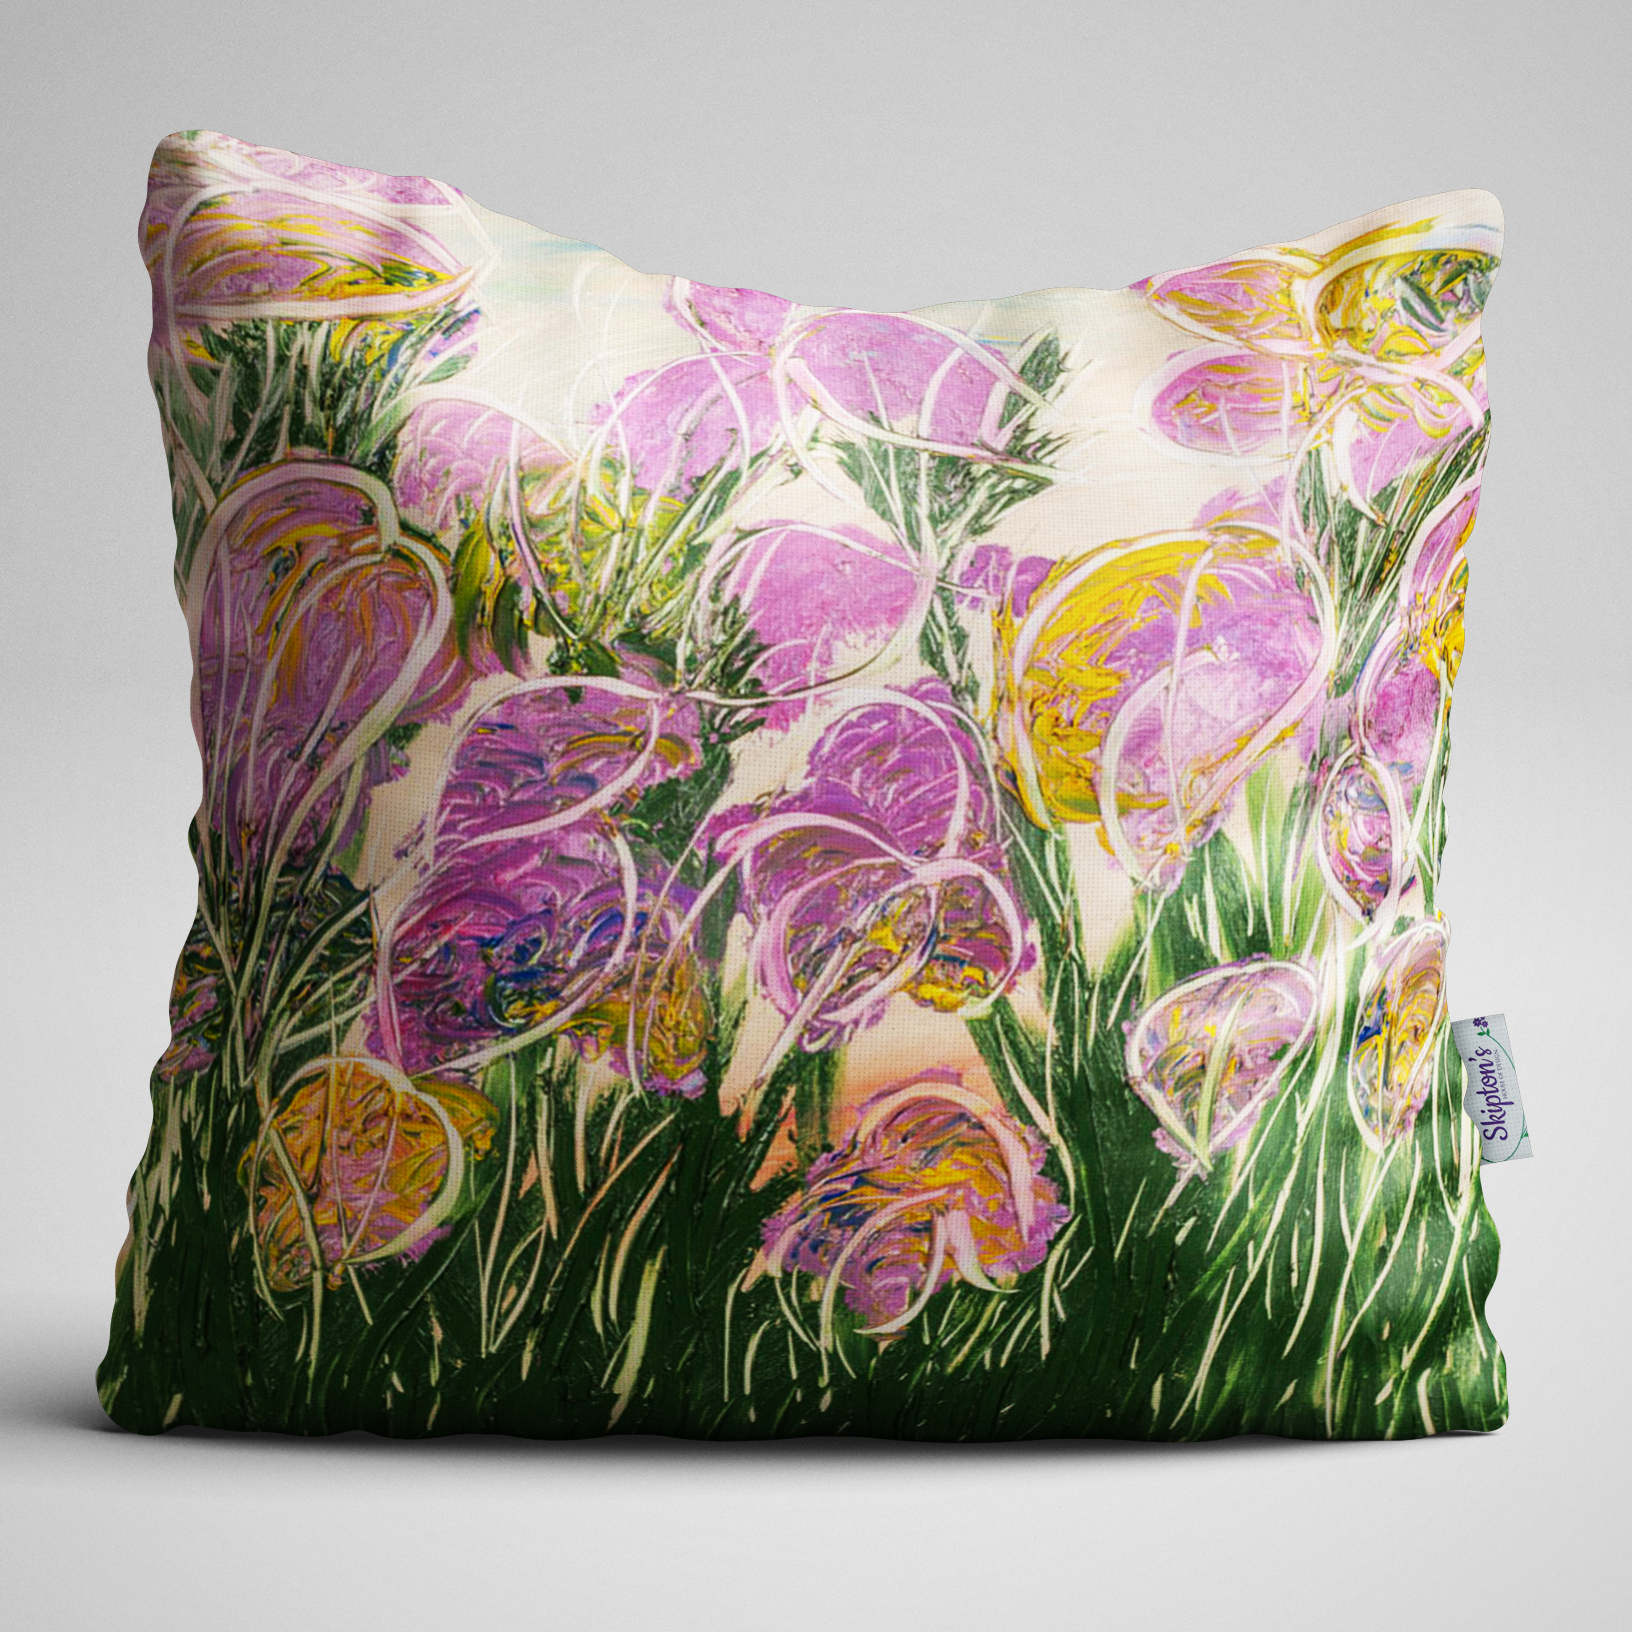 Bright Iris design on luxury velvet cushion